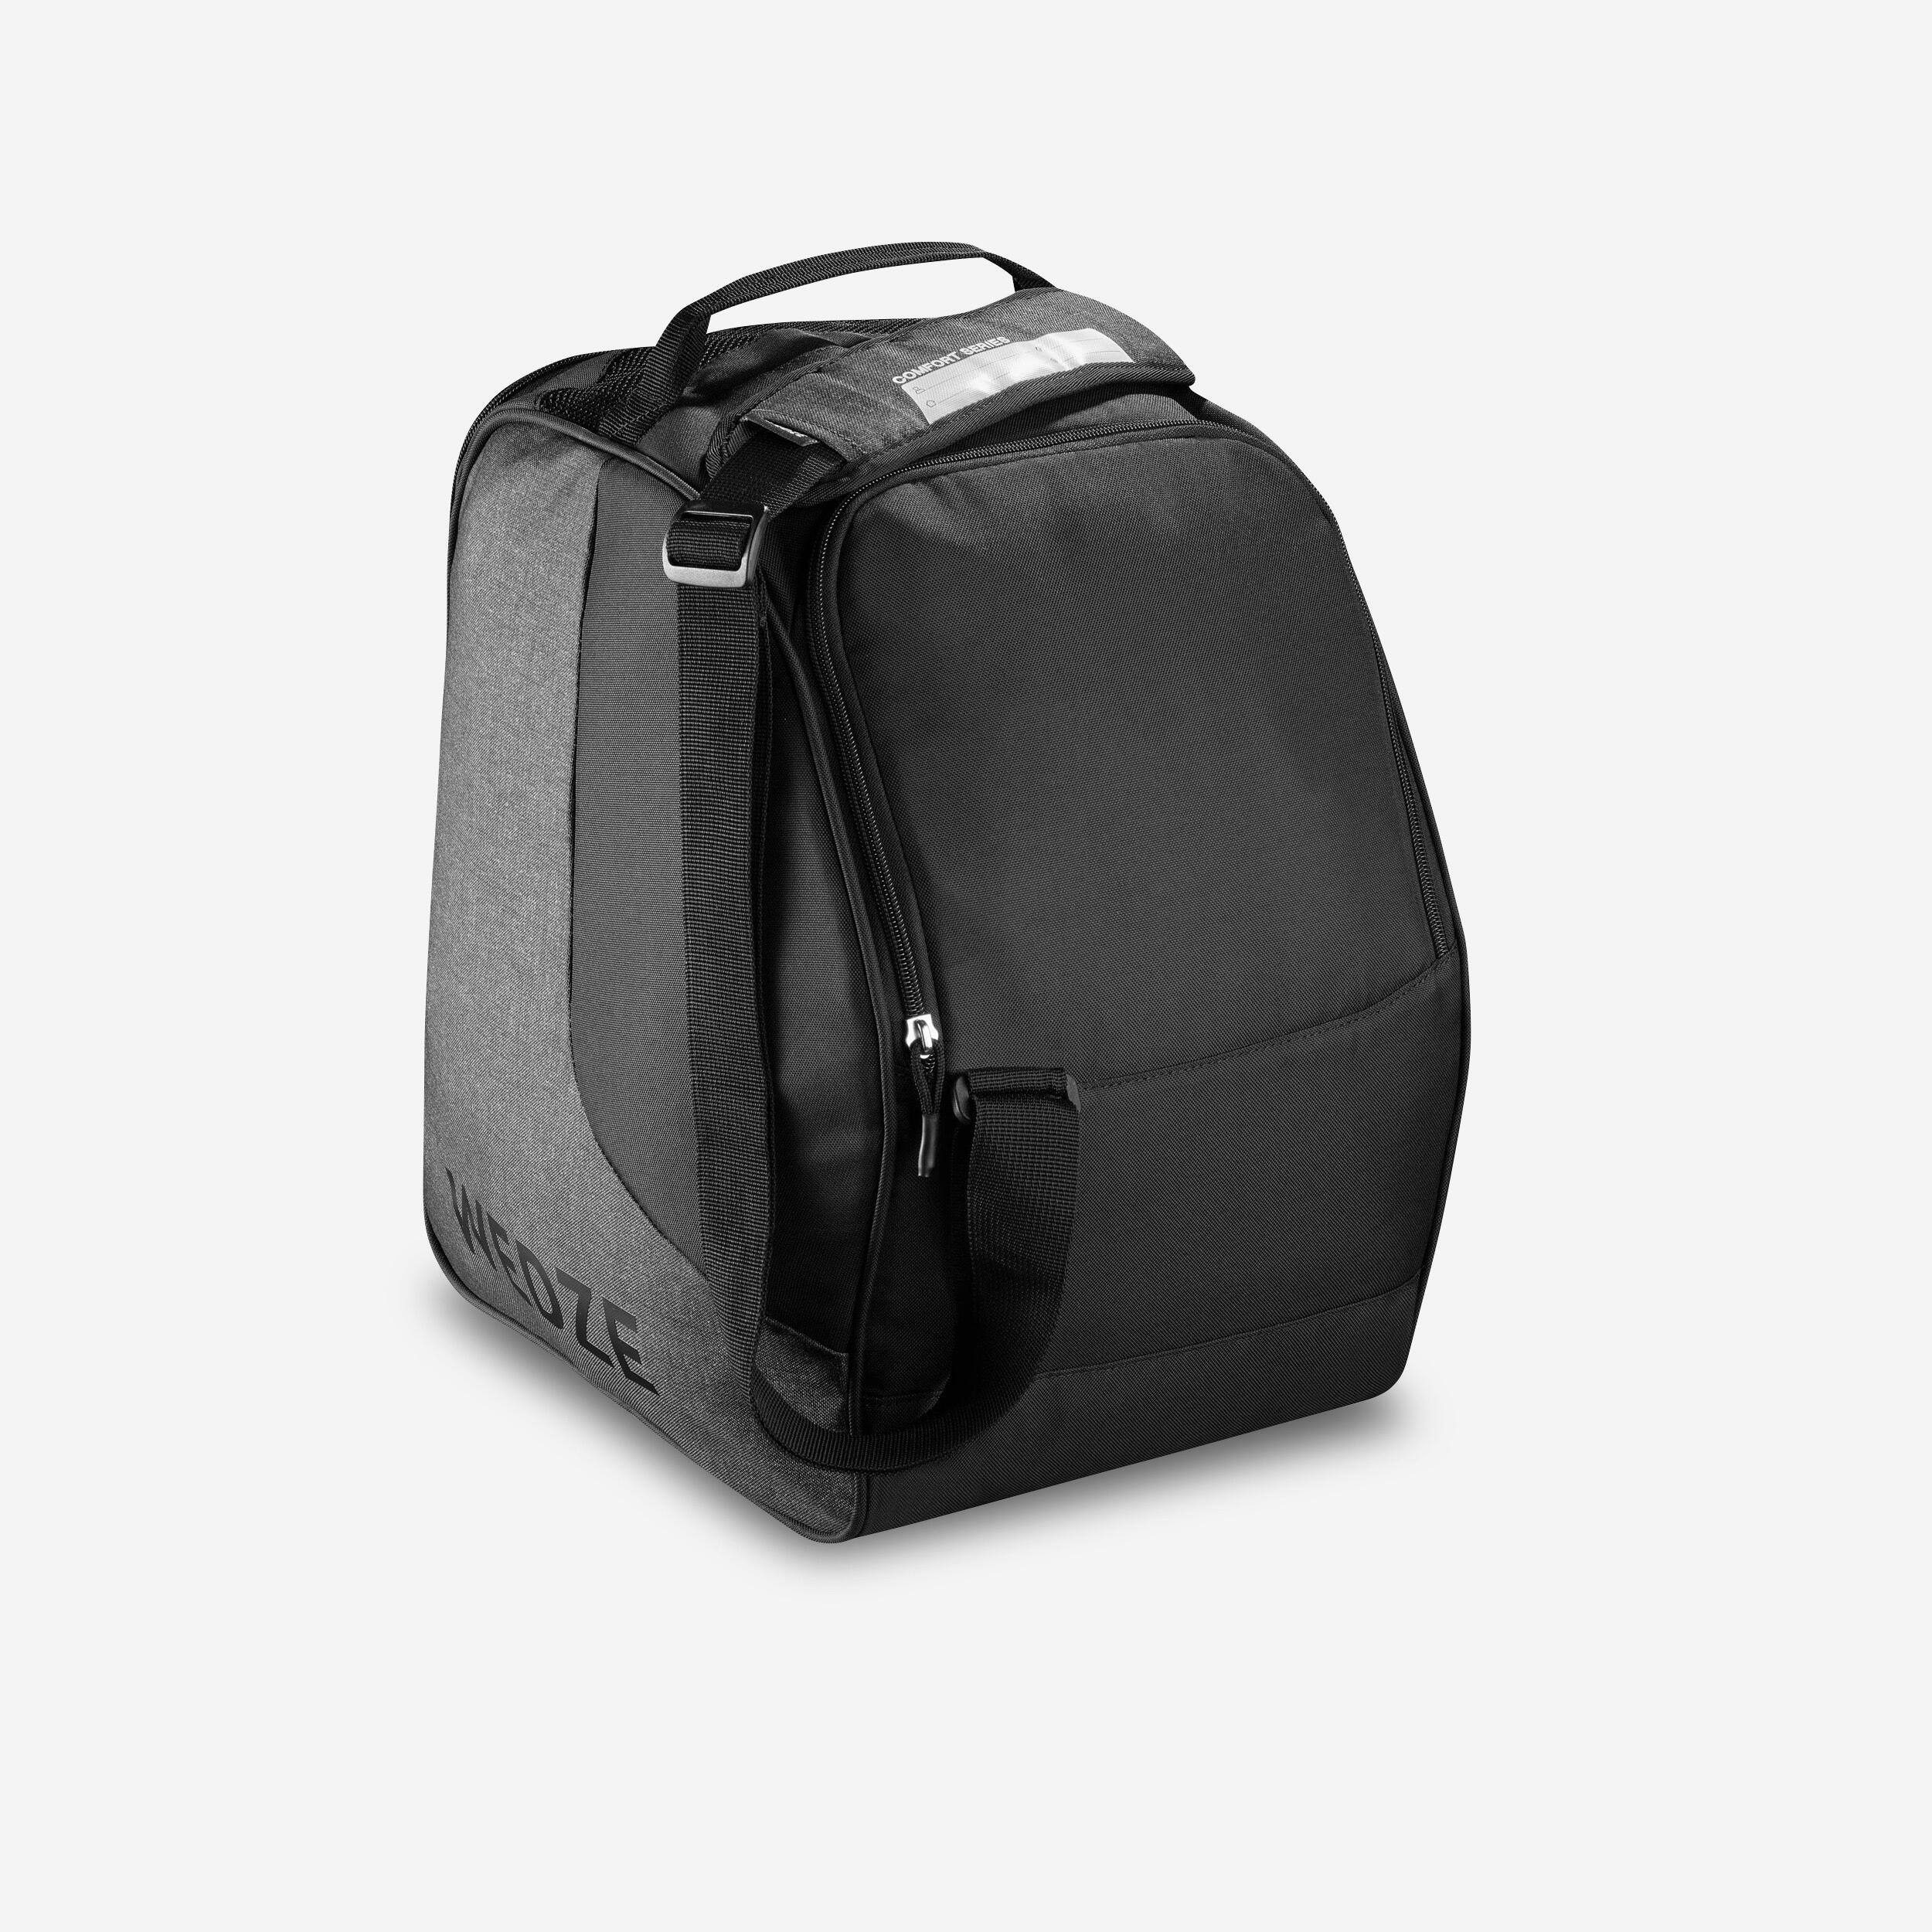 SKI BOOT BAG - 500 - GREY BLACK 1/6